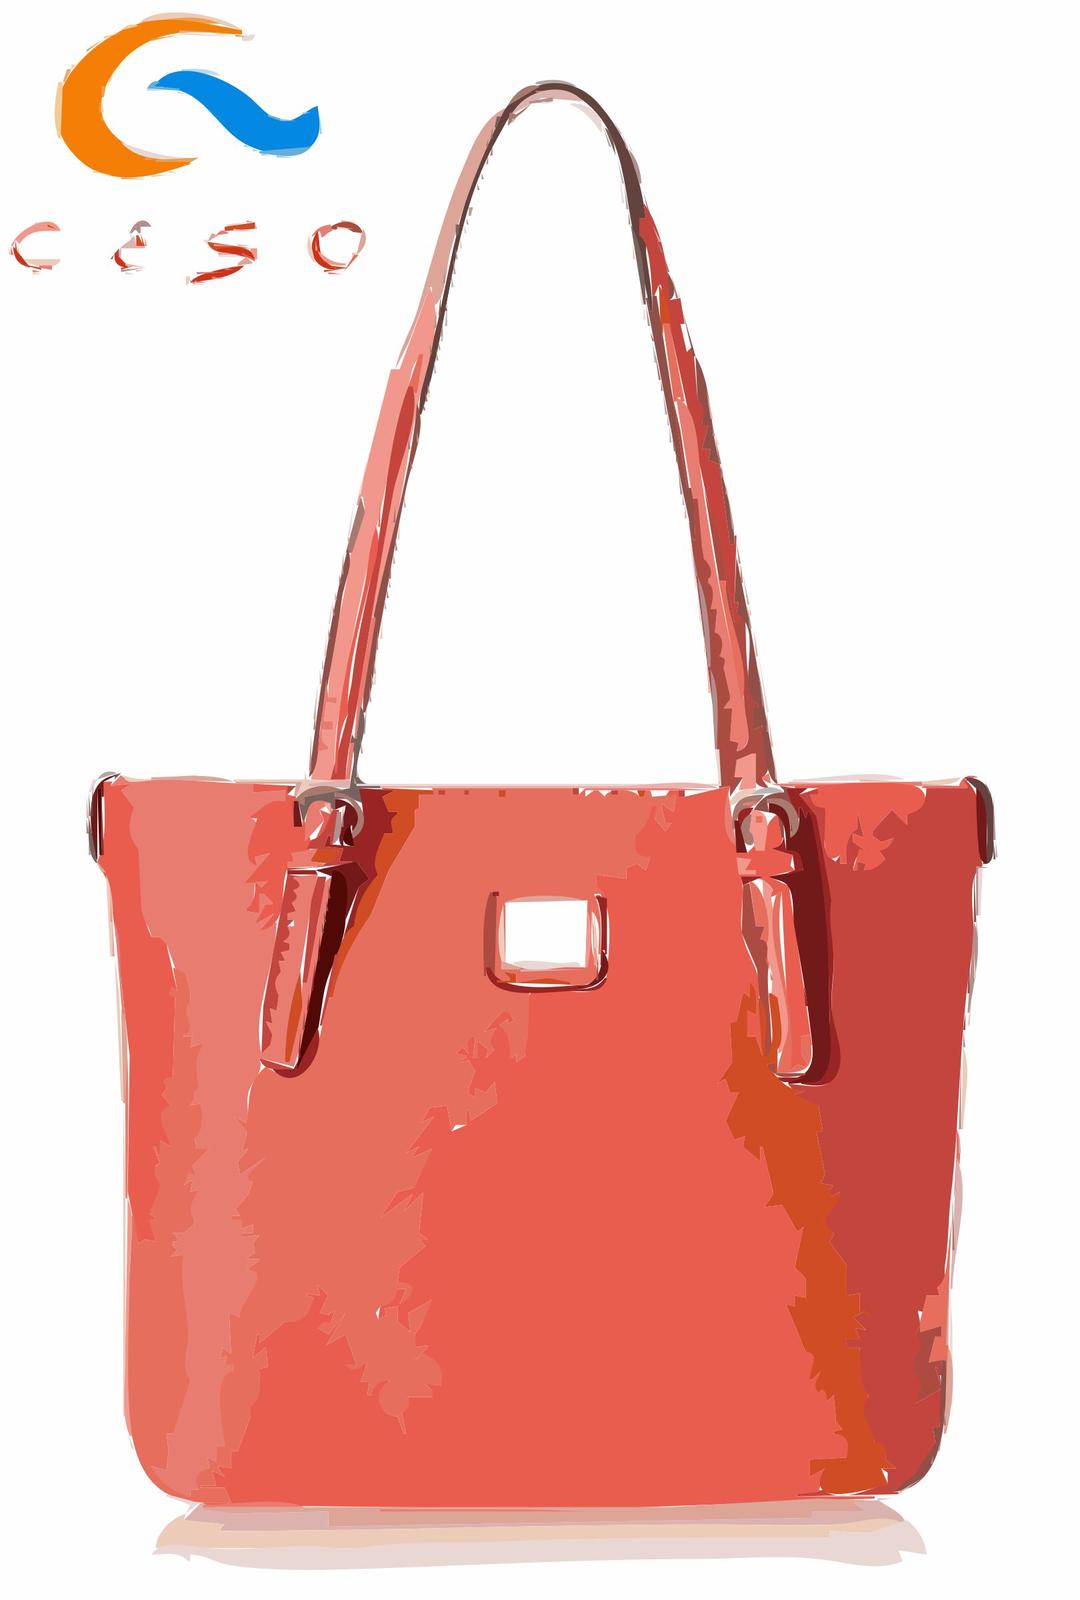 Orangish Red Bag with Logo png transparent